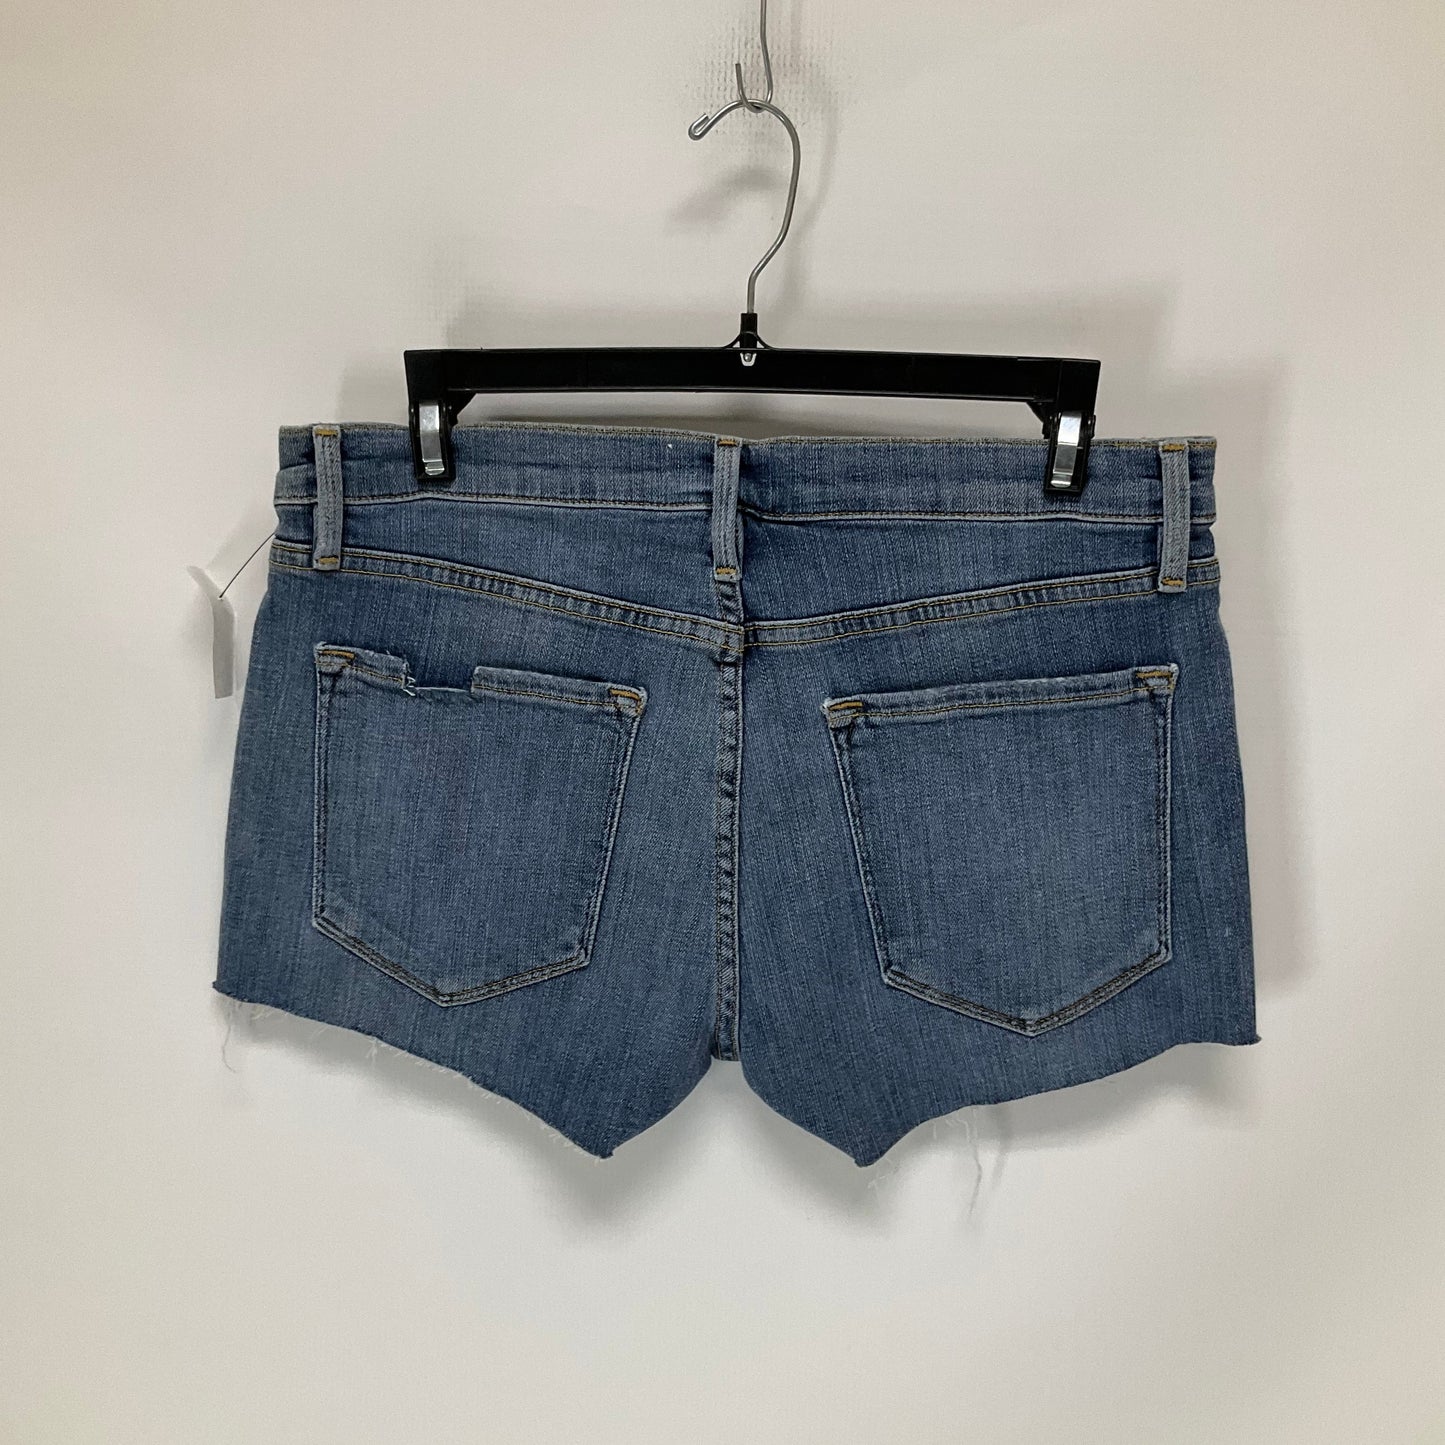 Blue Denim Shorts Frame, Size 6